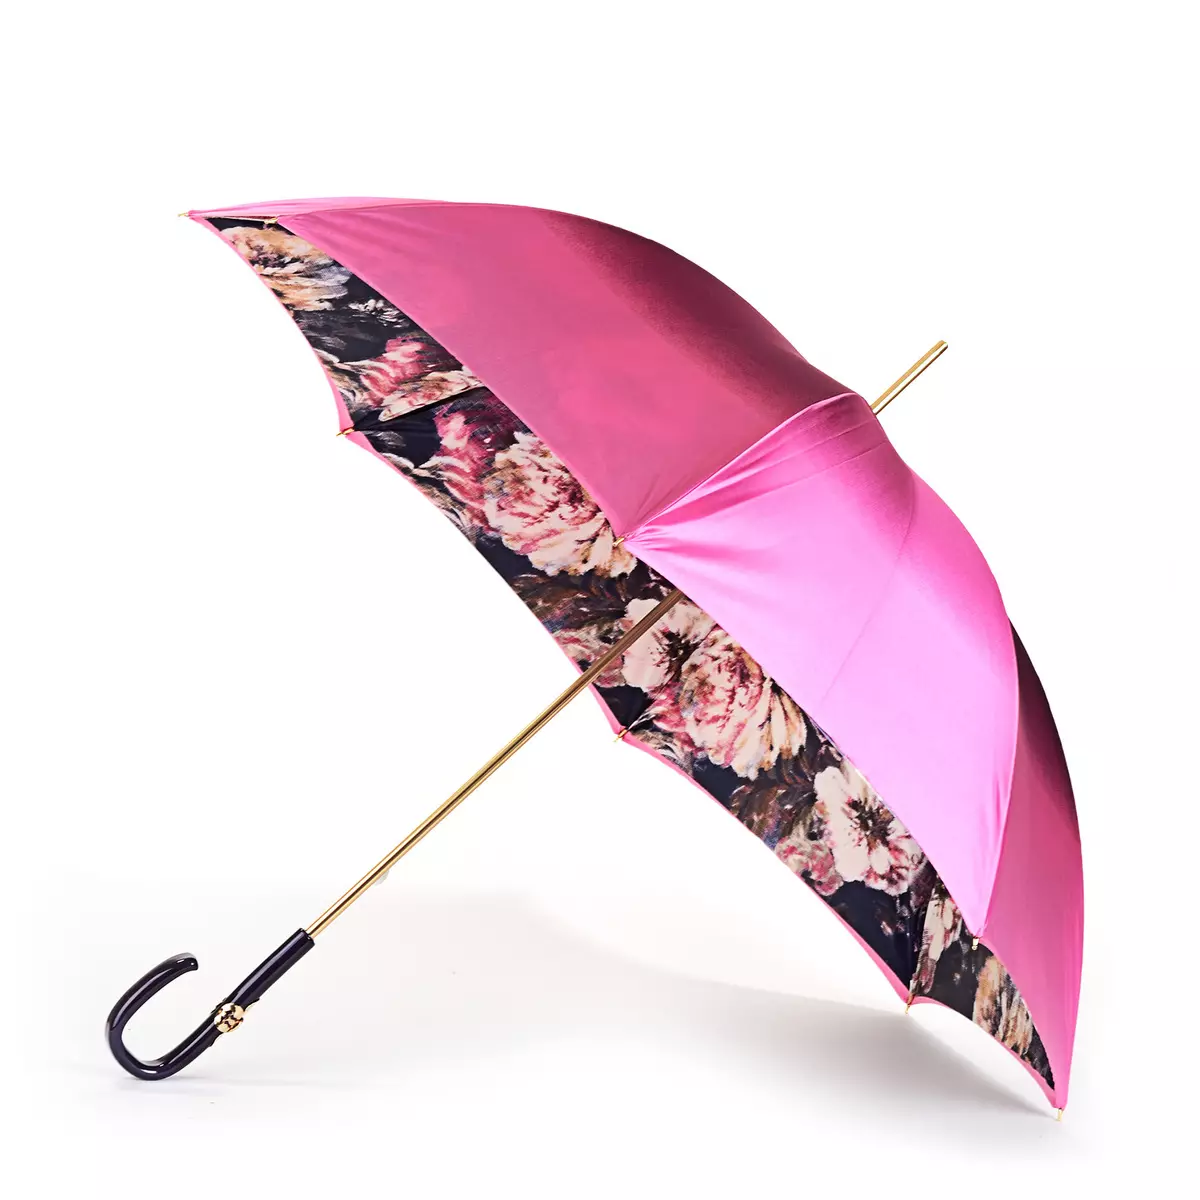 Pasotti ομπρέλες (55 φωτογραφίες): Χαρακτηριστικά του γυναικείου μοντέλου 15232_48